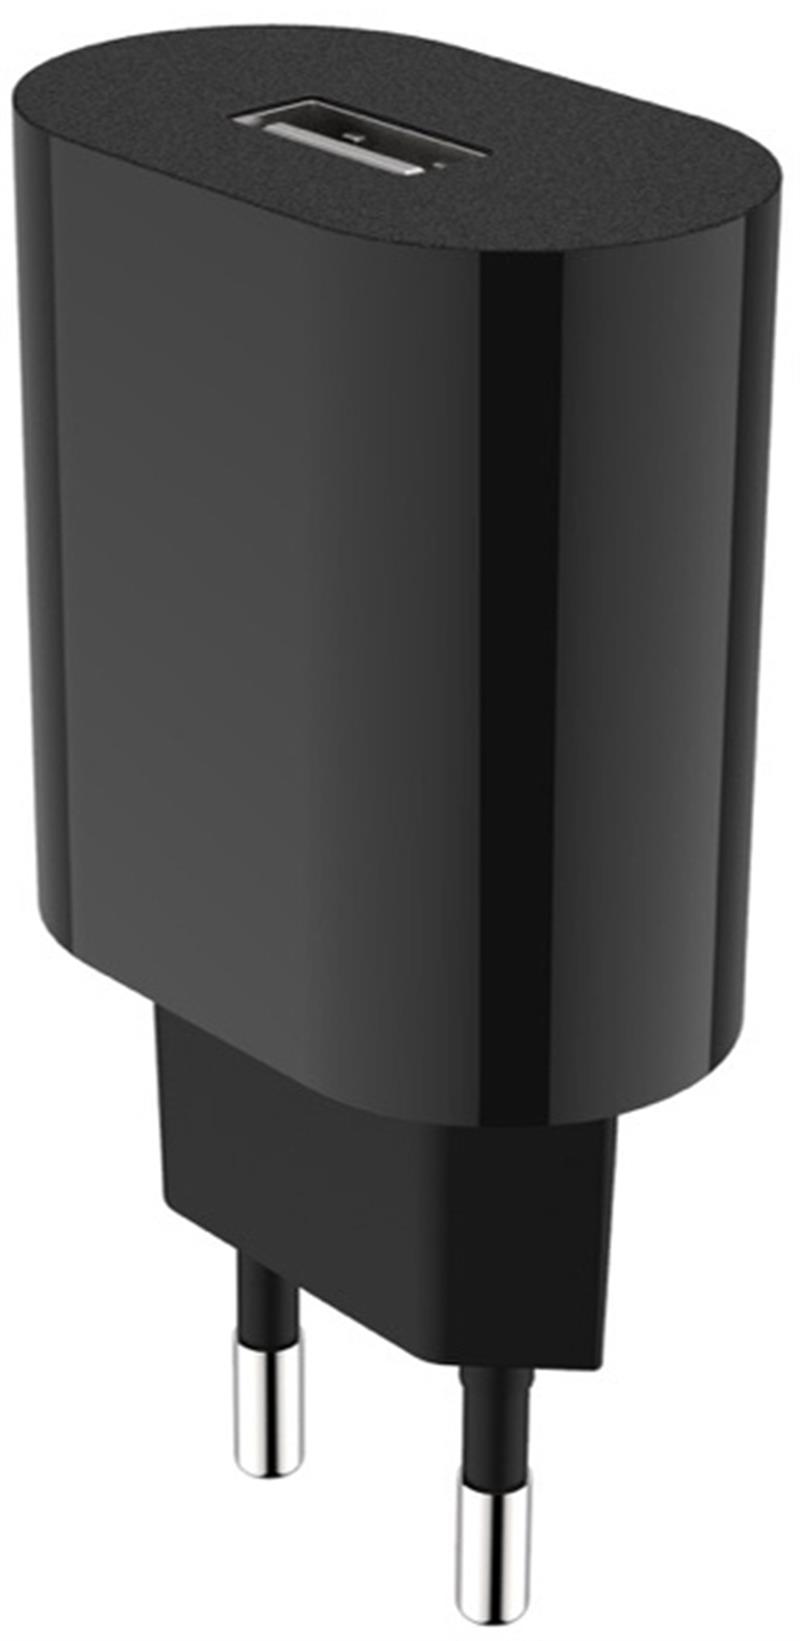 Terratec ChargeAIR dot! Wireless Charger 5W 7 5W 10W Black Silver